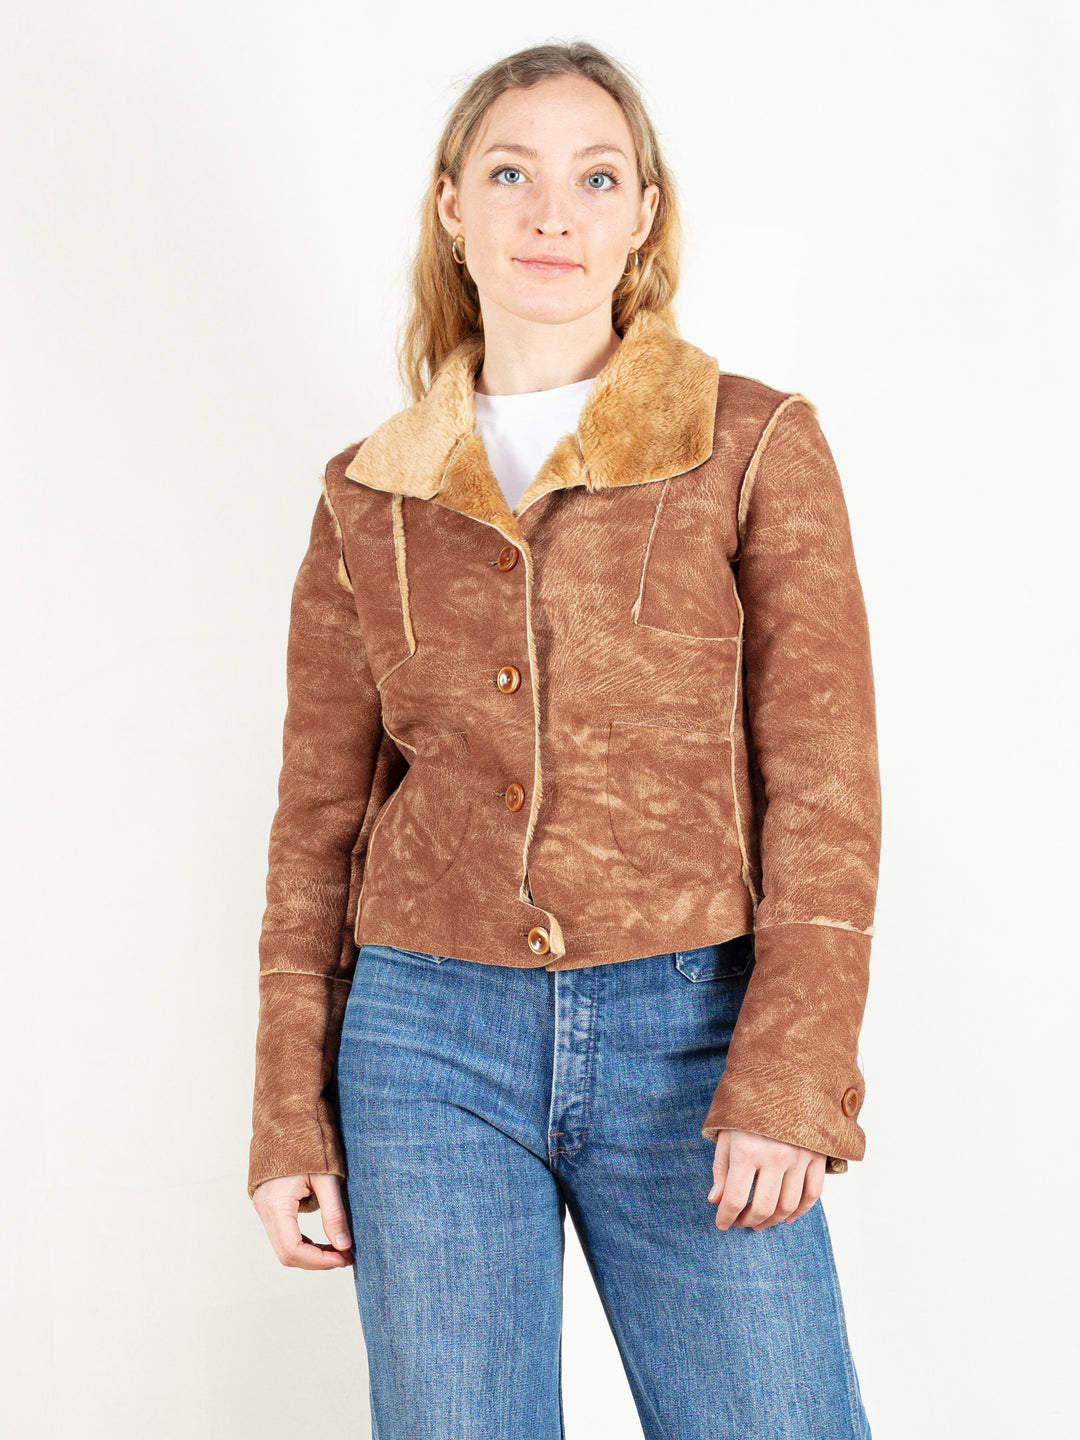 Faux Suede Jacket 90s brown jacket suede faux fur short coat sherpa coat winter outerwear hippie coat women vintage clothing size medium